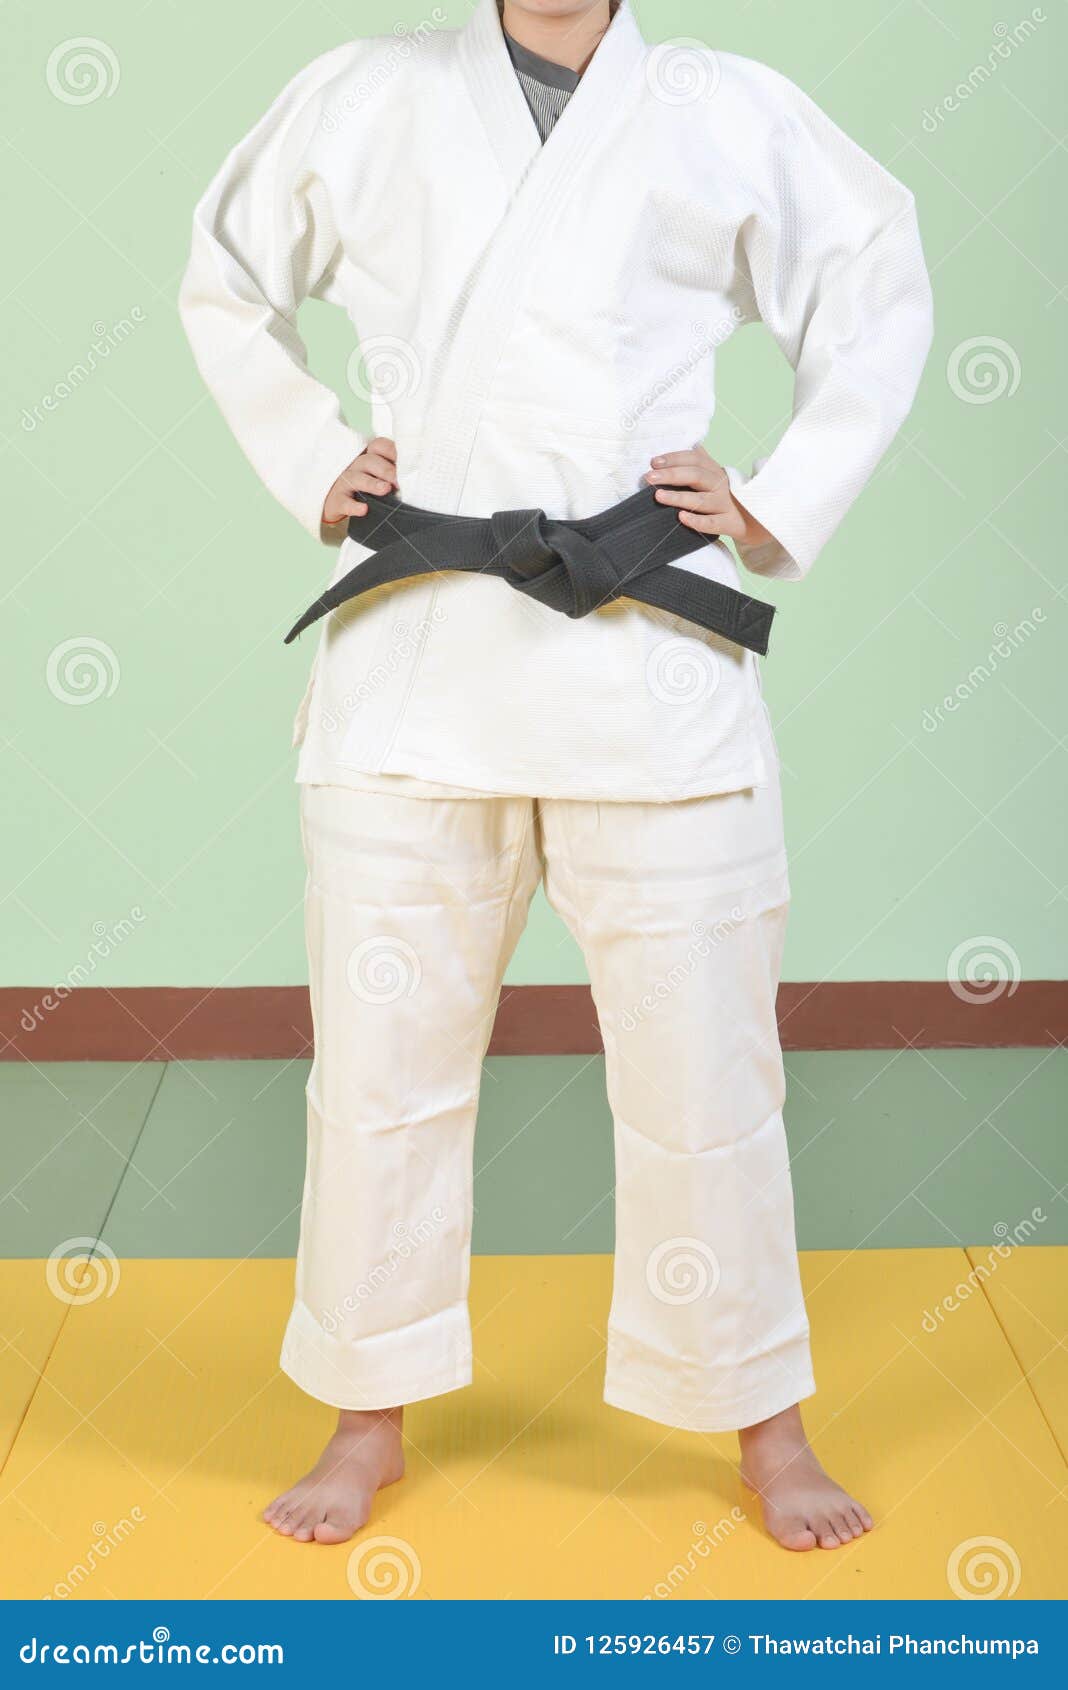 Details about   Karate Martial Arts White Size 3/170 Belt Judo MMA Jujitsu 